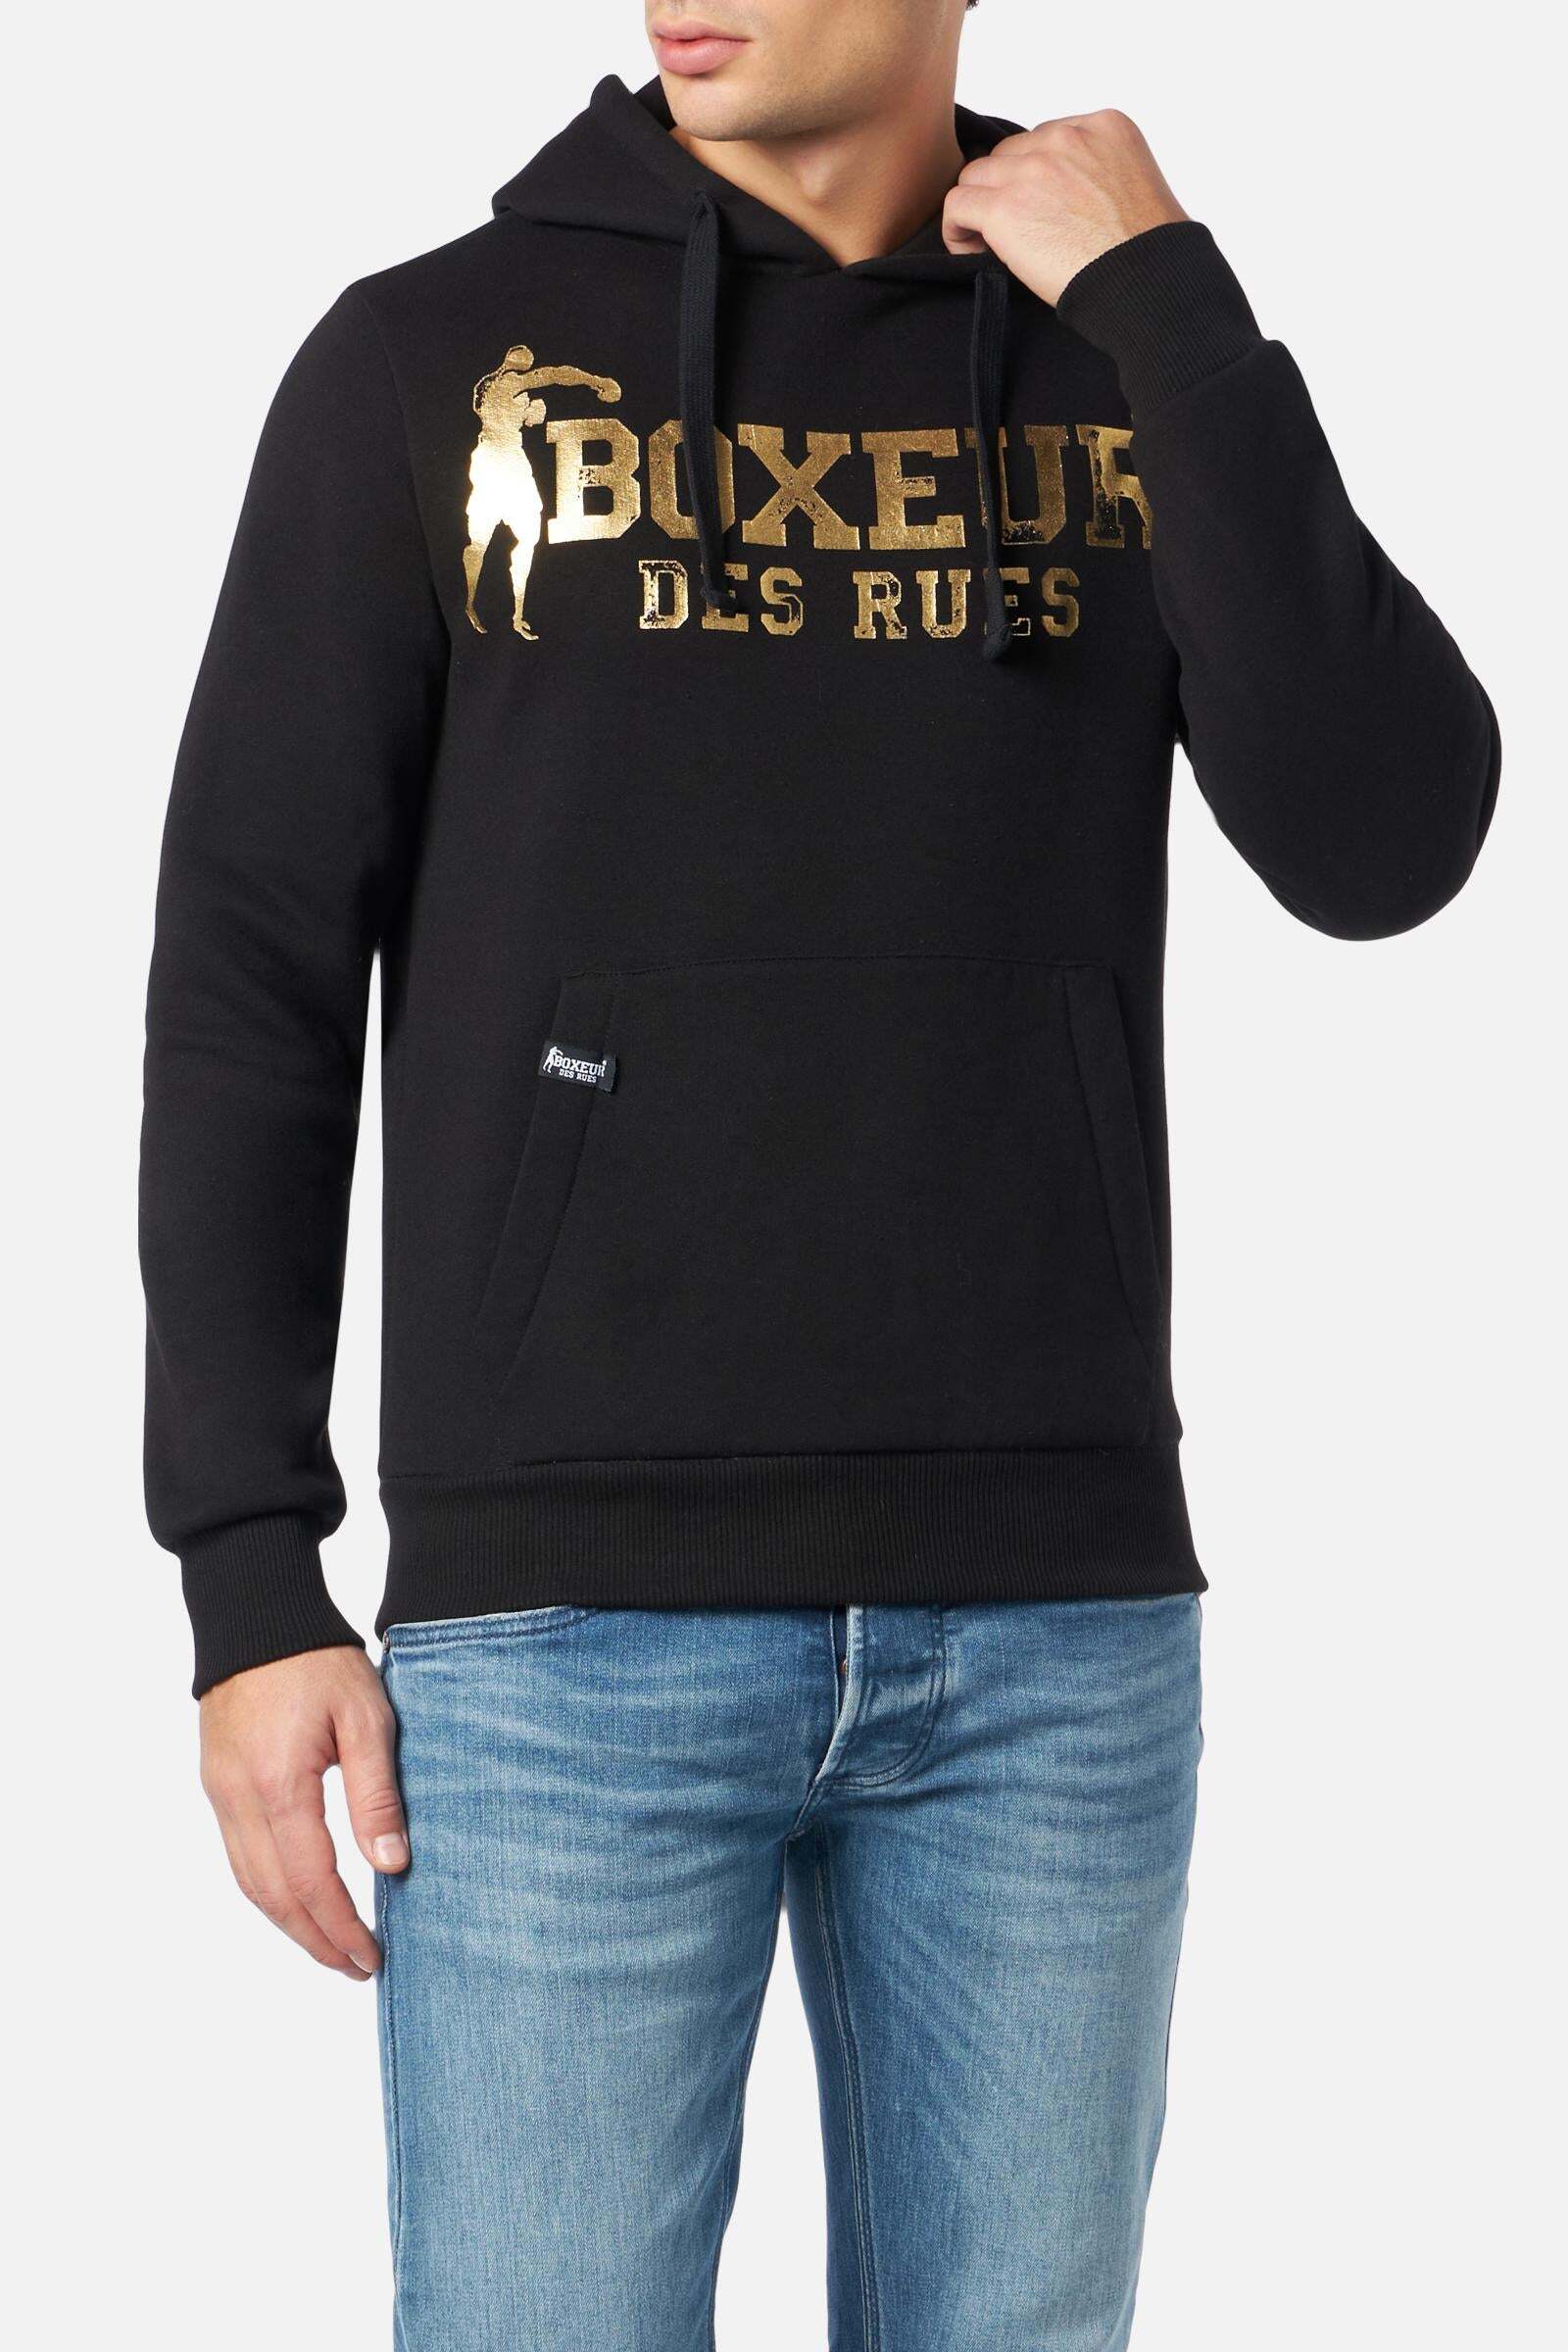 BOXEUR DES RUES Kapuzenpullover »Sweatshirts Man Hoodie Sweatshirt« von BOXEUR DES RUES